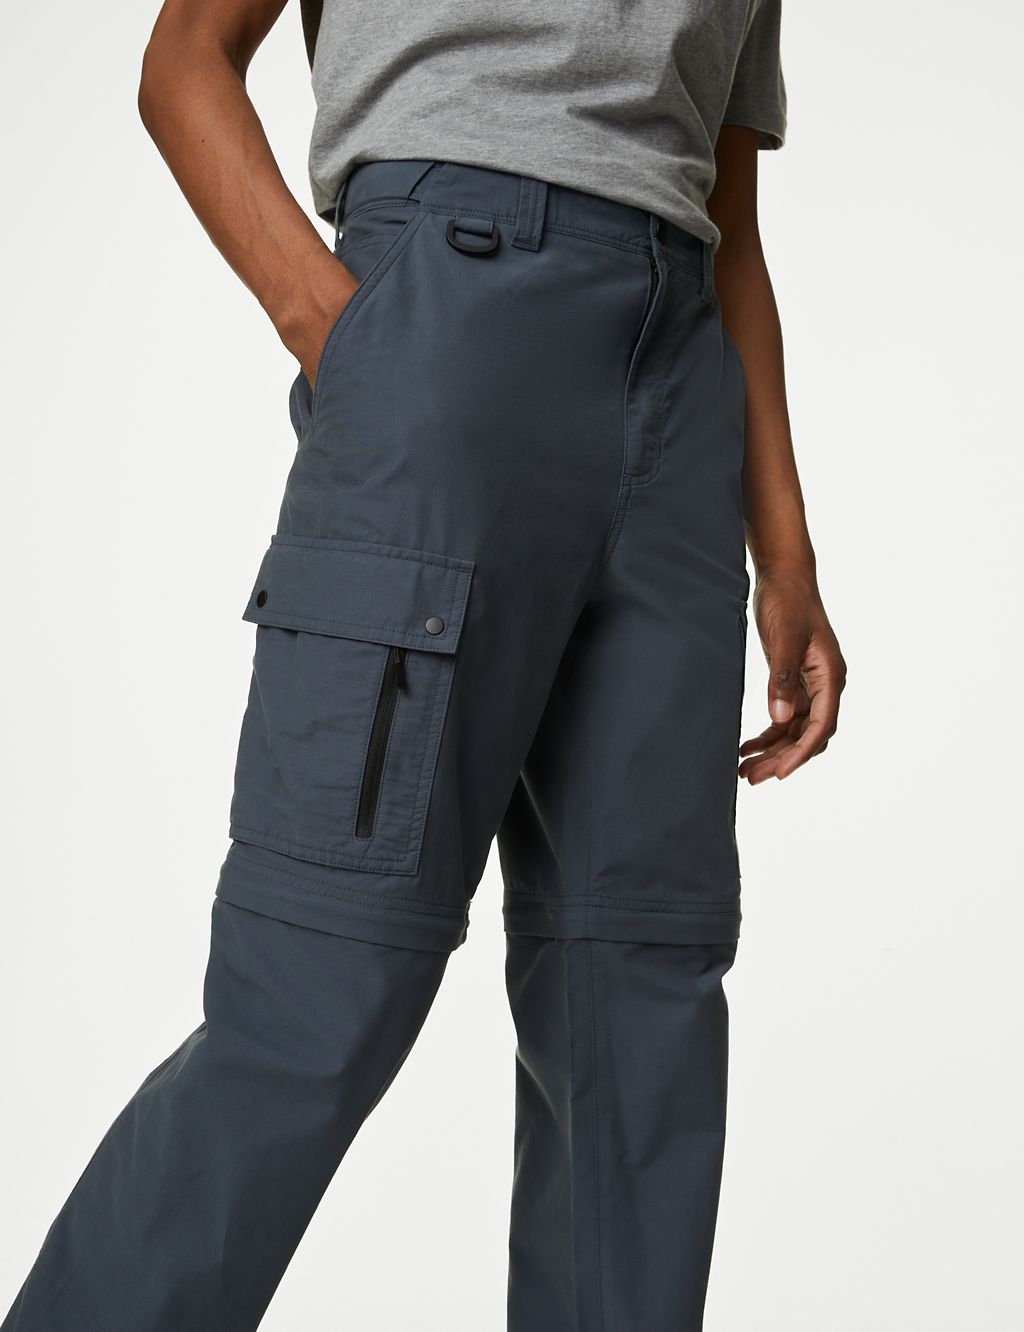 Zip Off Trekking Trousers with Stormwear™ 6 of 7